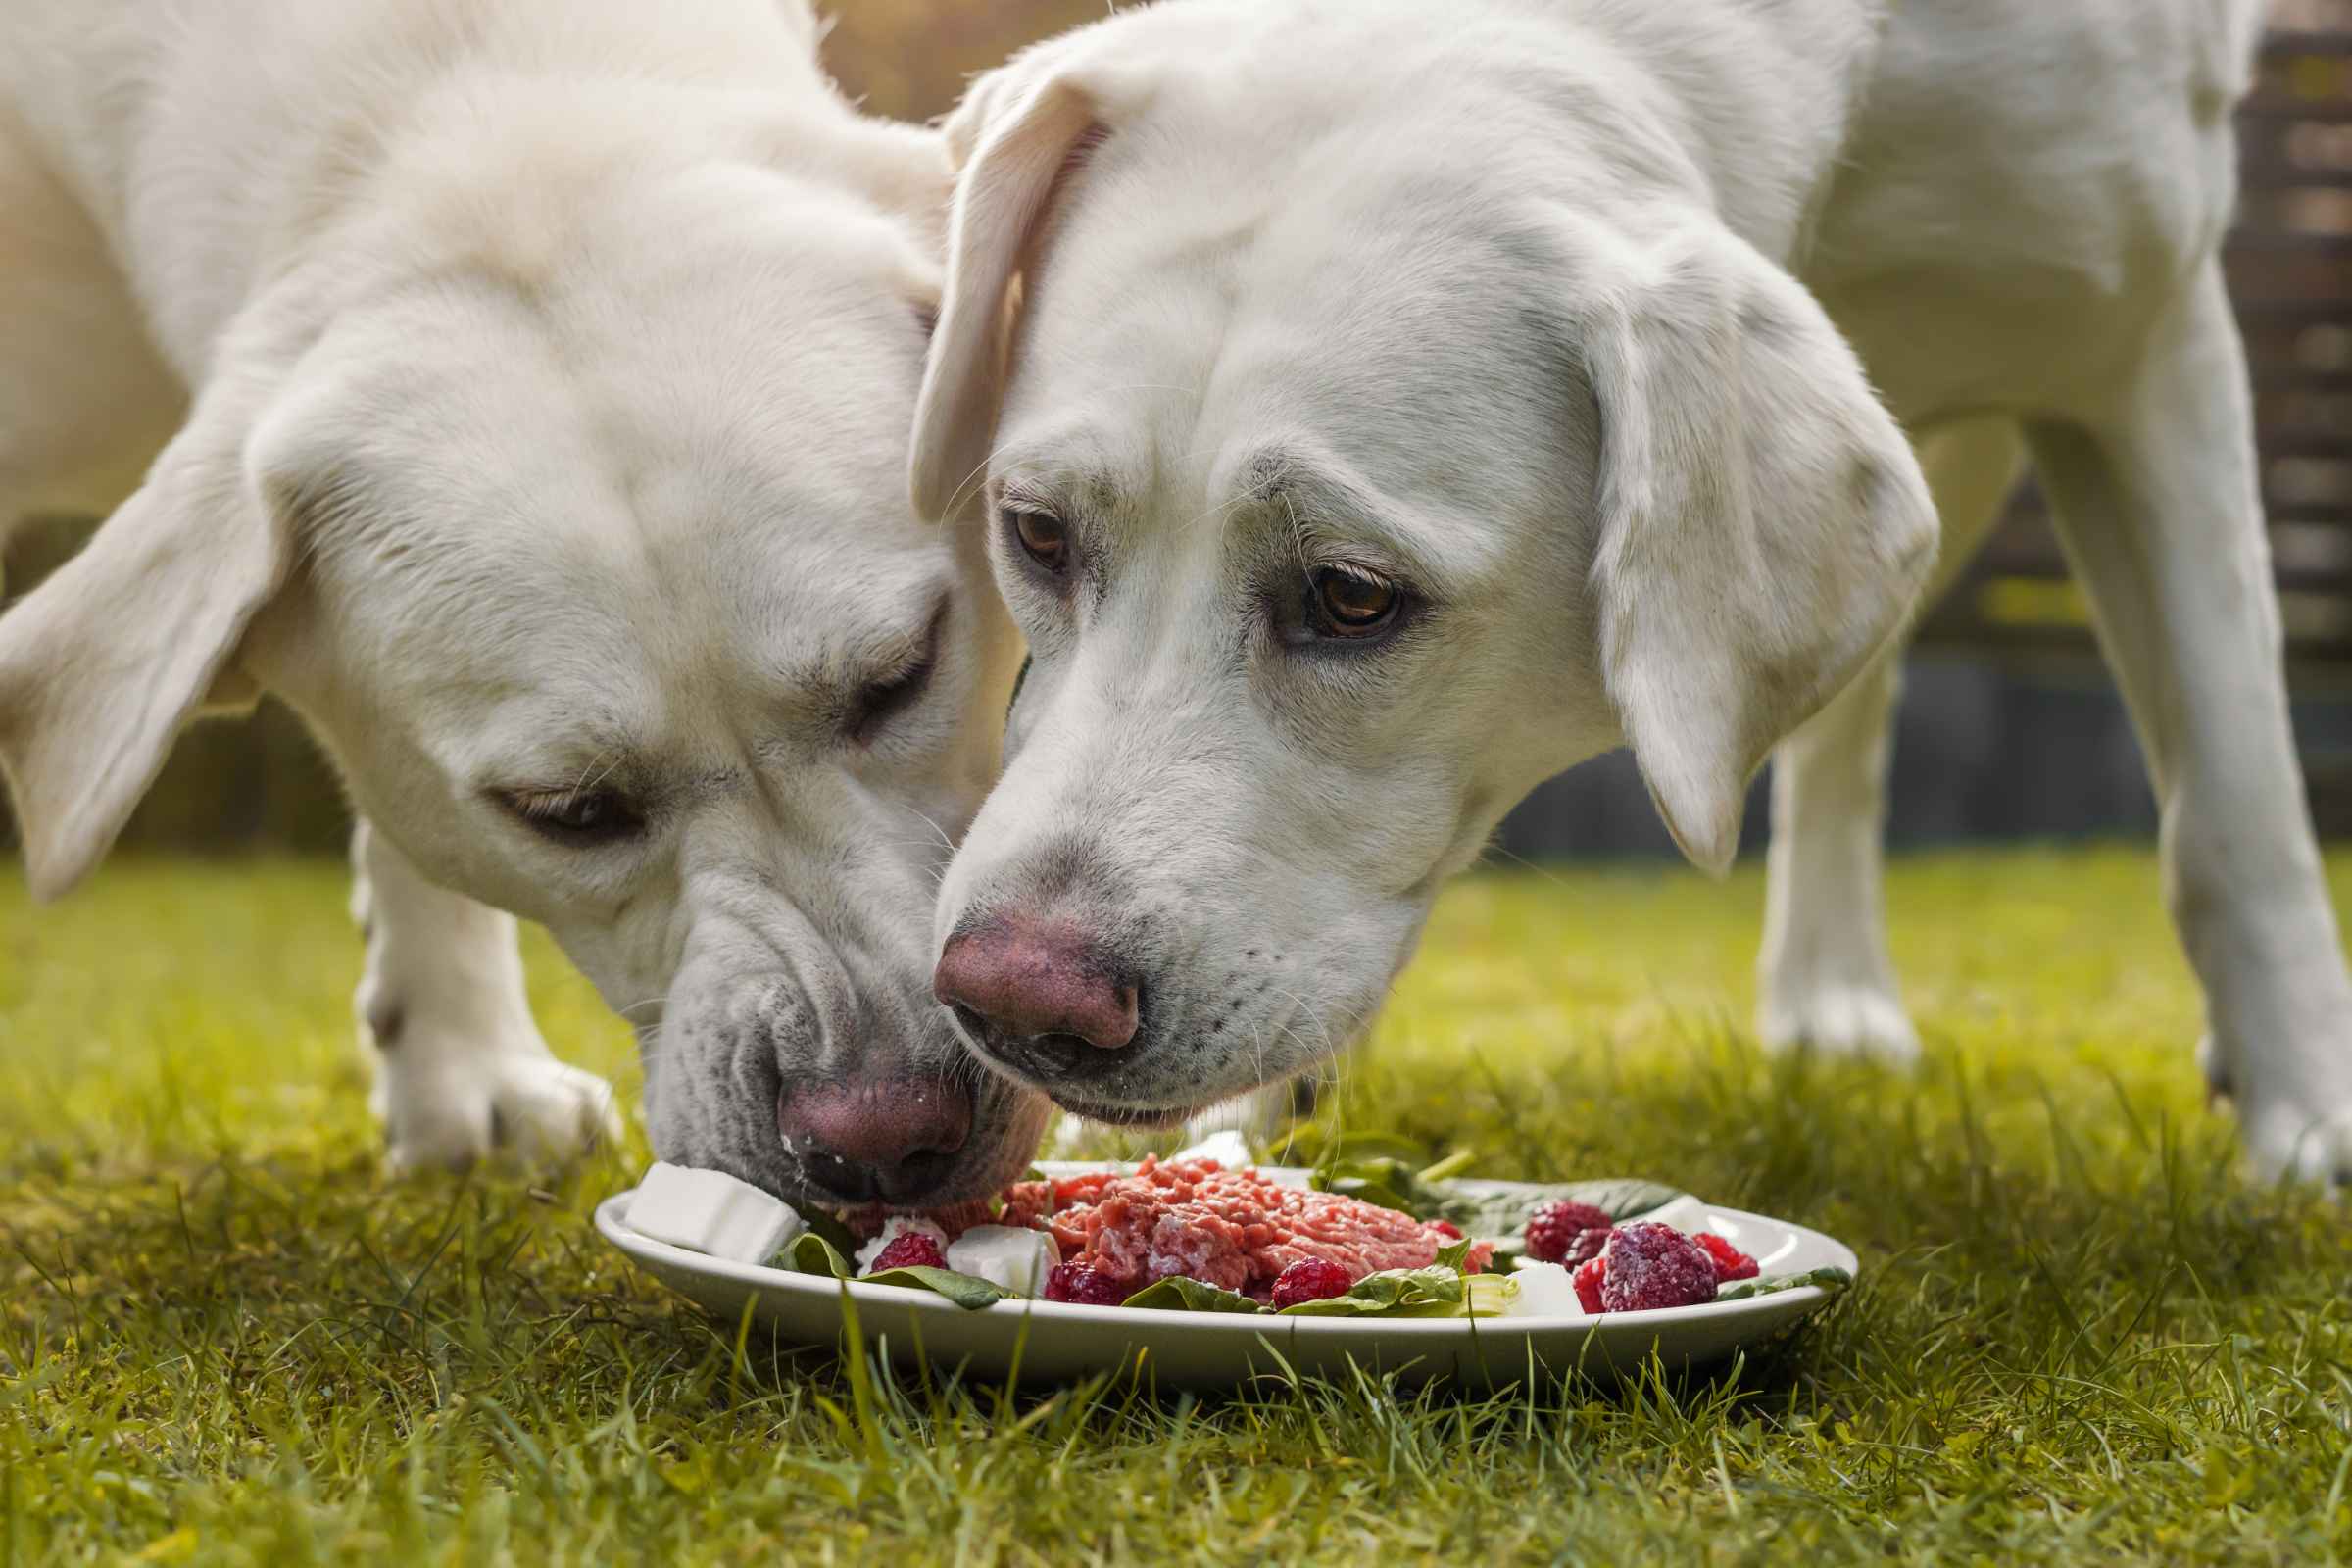 Two young Labrador retriever dog puppies